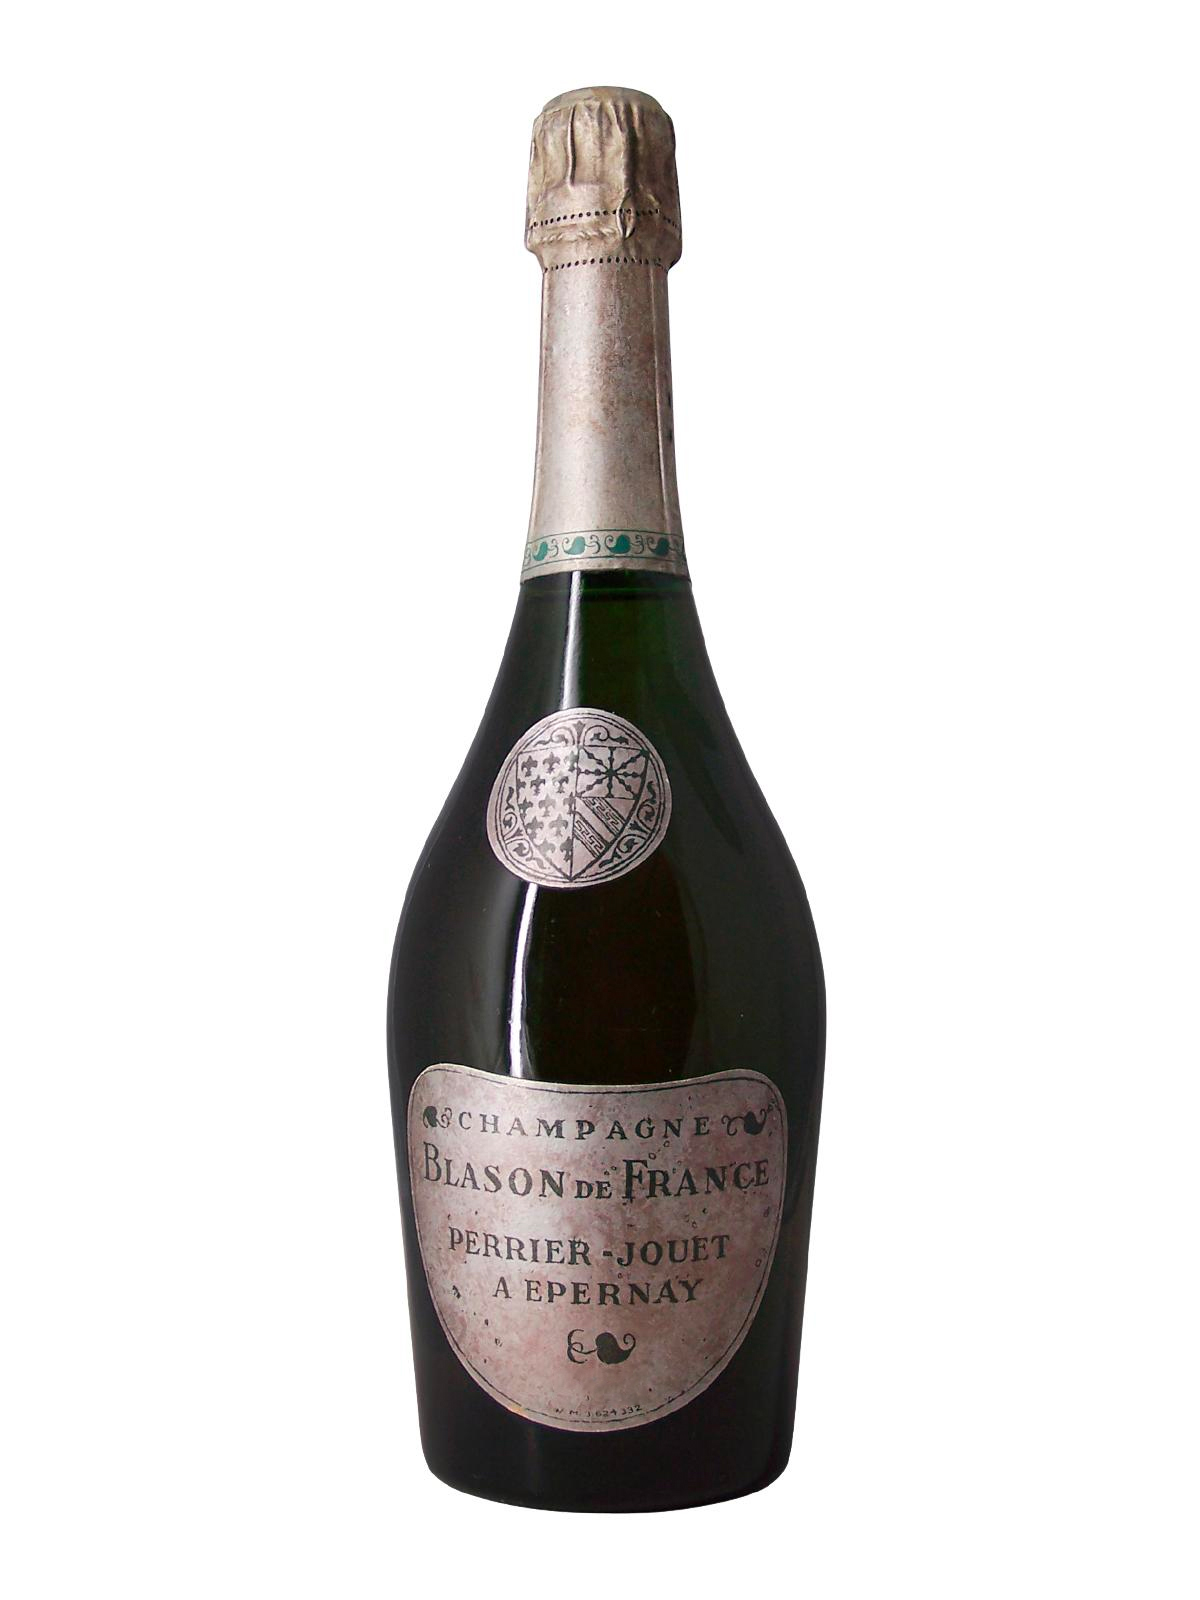 Perrier jouet blason de france 1964  Perrier Jouet, Champagne